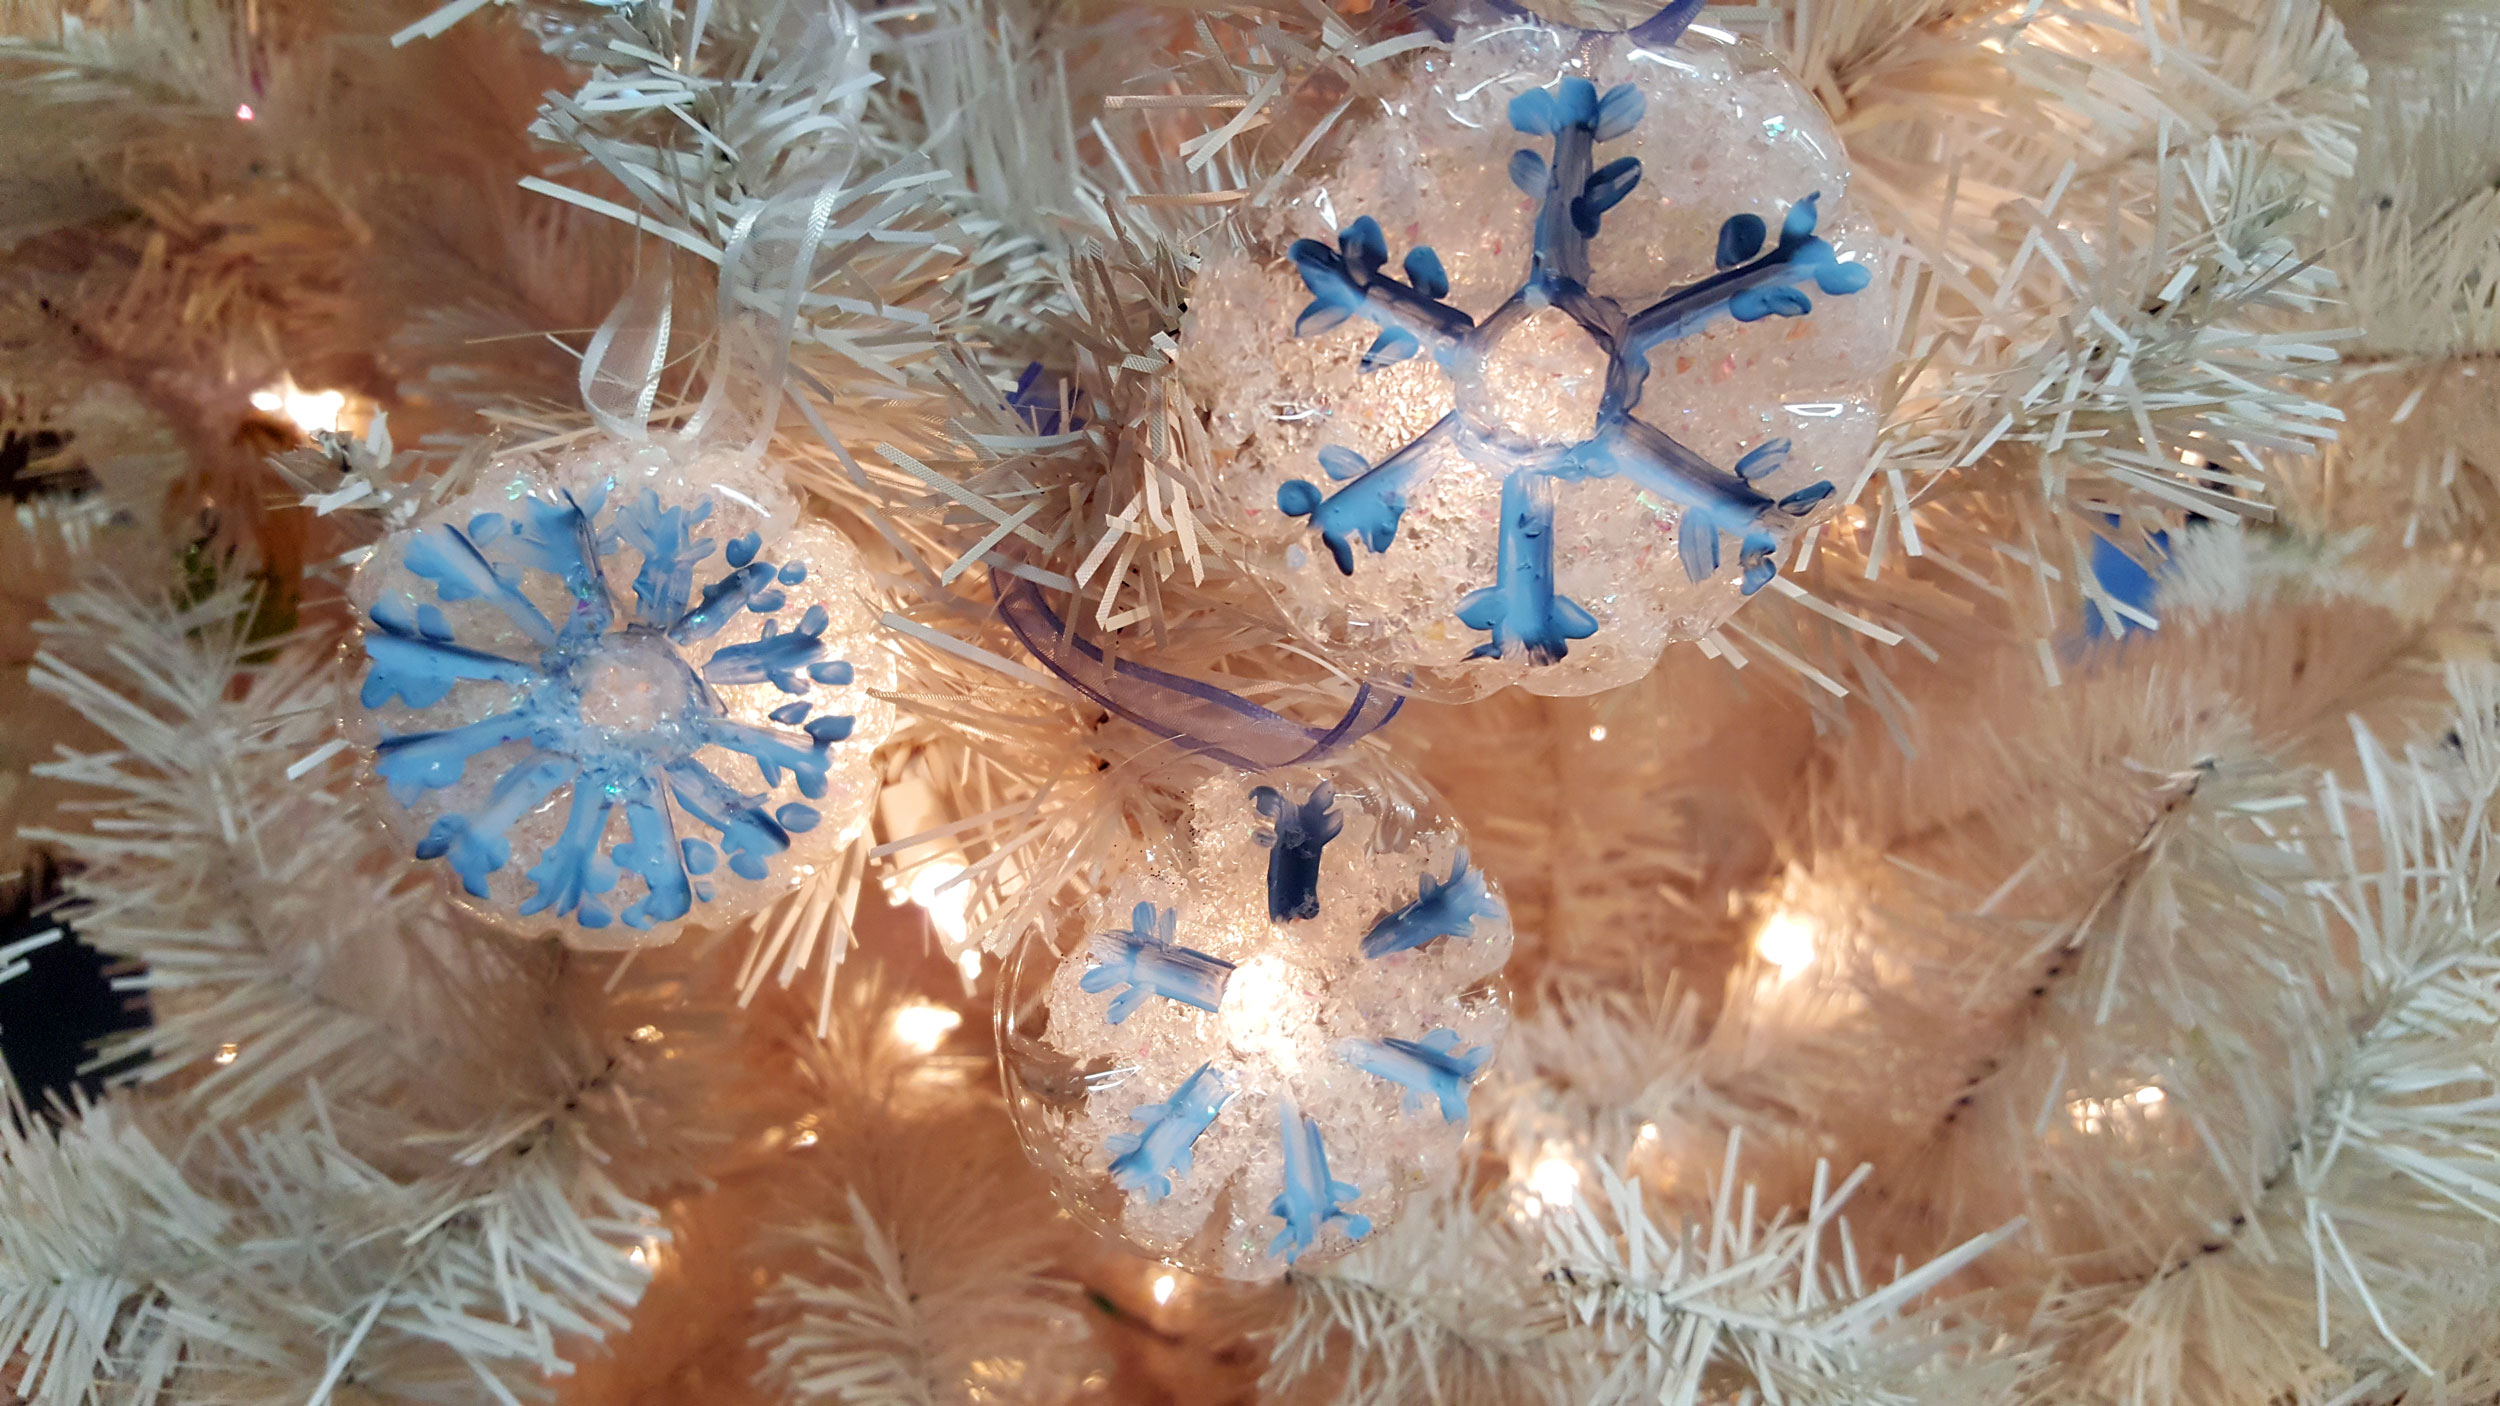 Snowflake Ornaments Lit Up On Christmas Tree | OrnamentShop.com